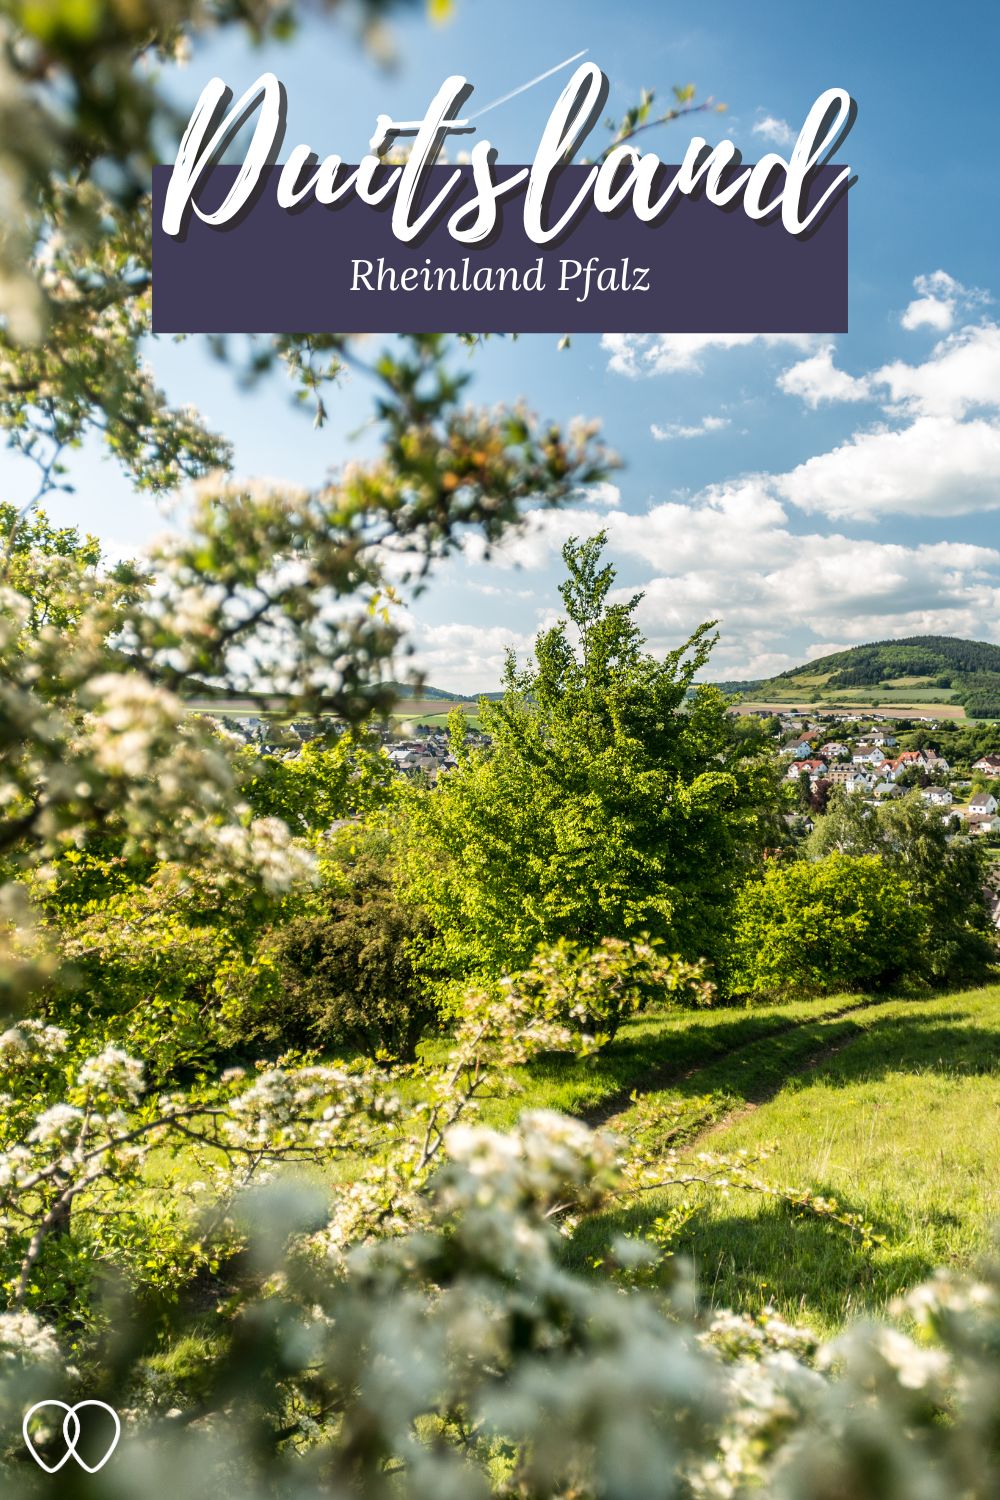 Rijnland Palts, Duitsland. Ontdek alle mooie bezienswaardigheden in Rheinland Pfalz, Duitsland | Mooistestedentrips.nl